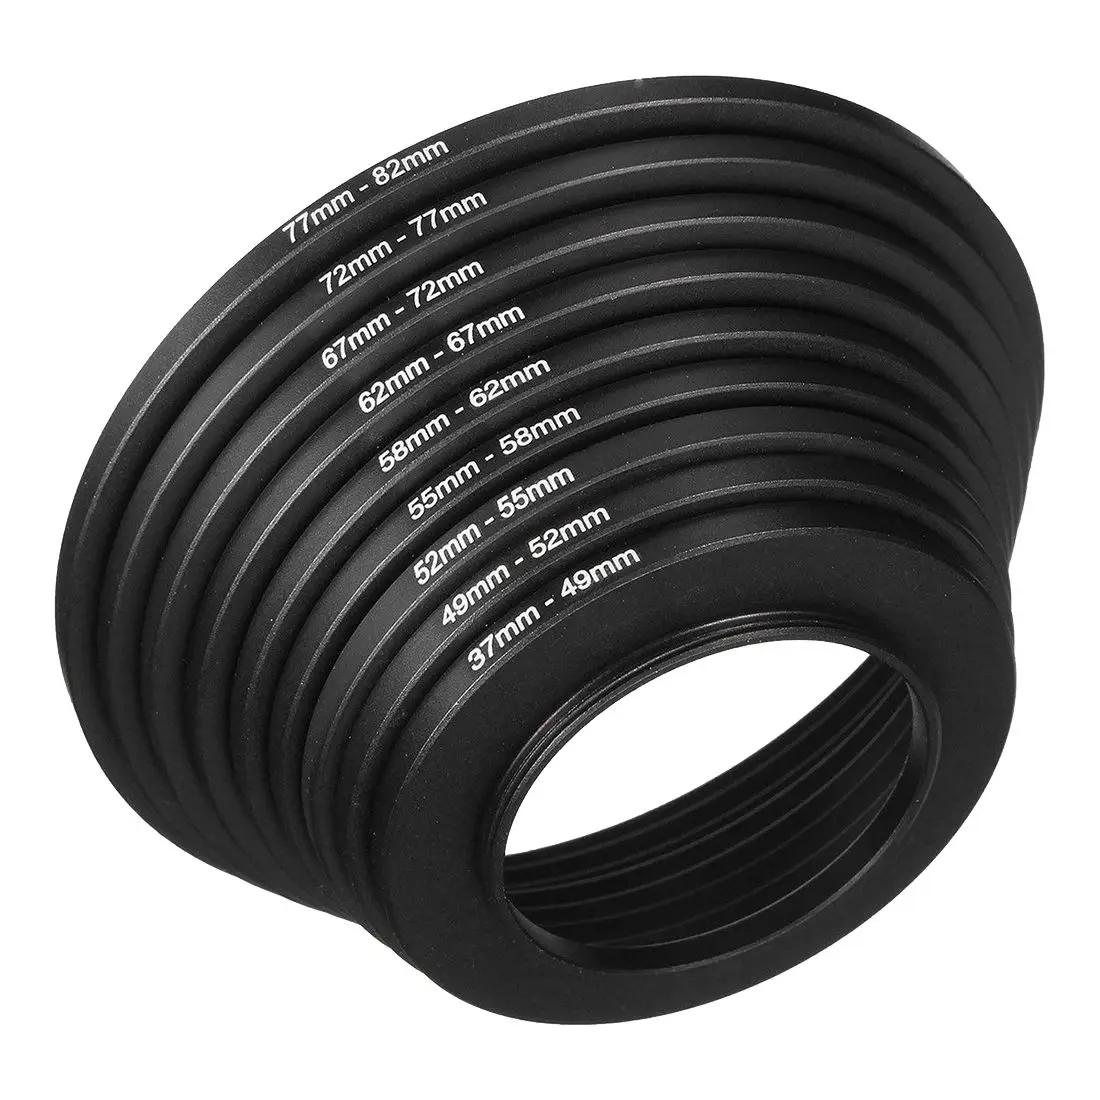 18Pcs Lens Filter Ring Adapter Žingsnis Aukštyn Žemyn 37-82mm Rinkinys, Skirtas 